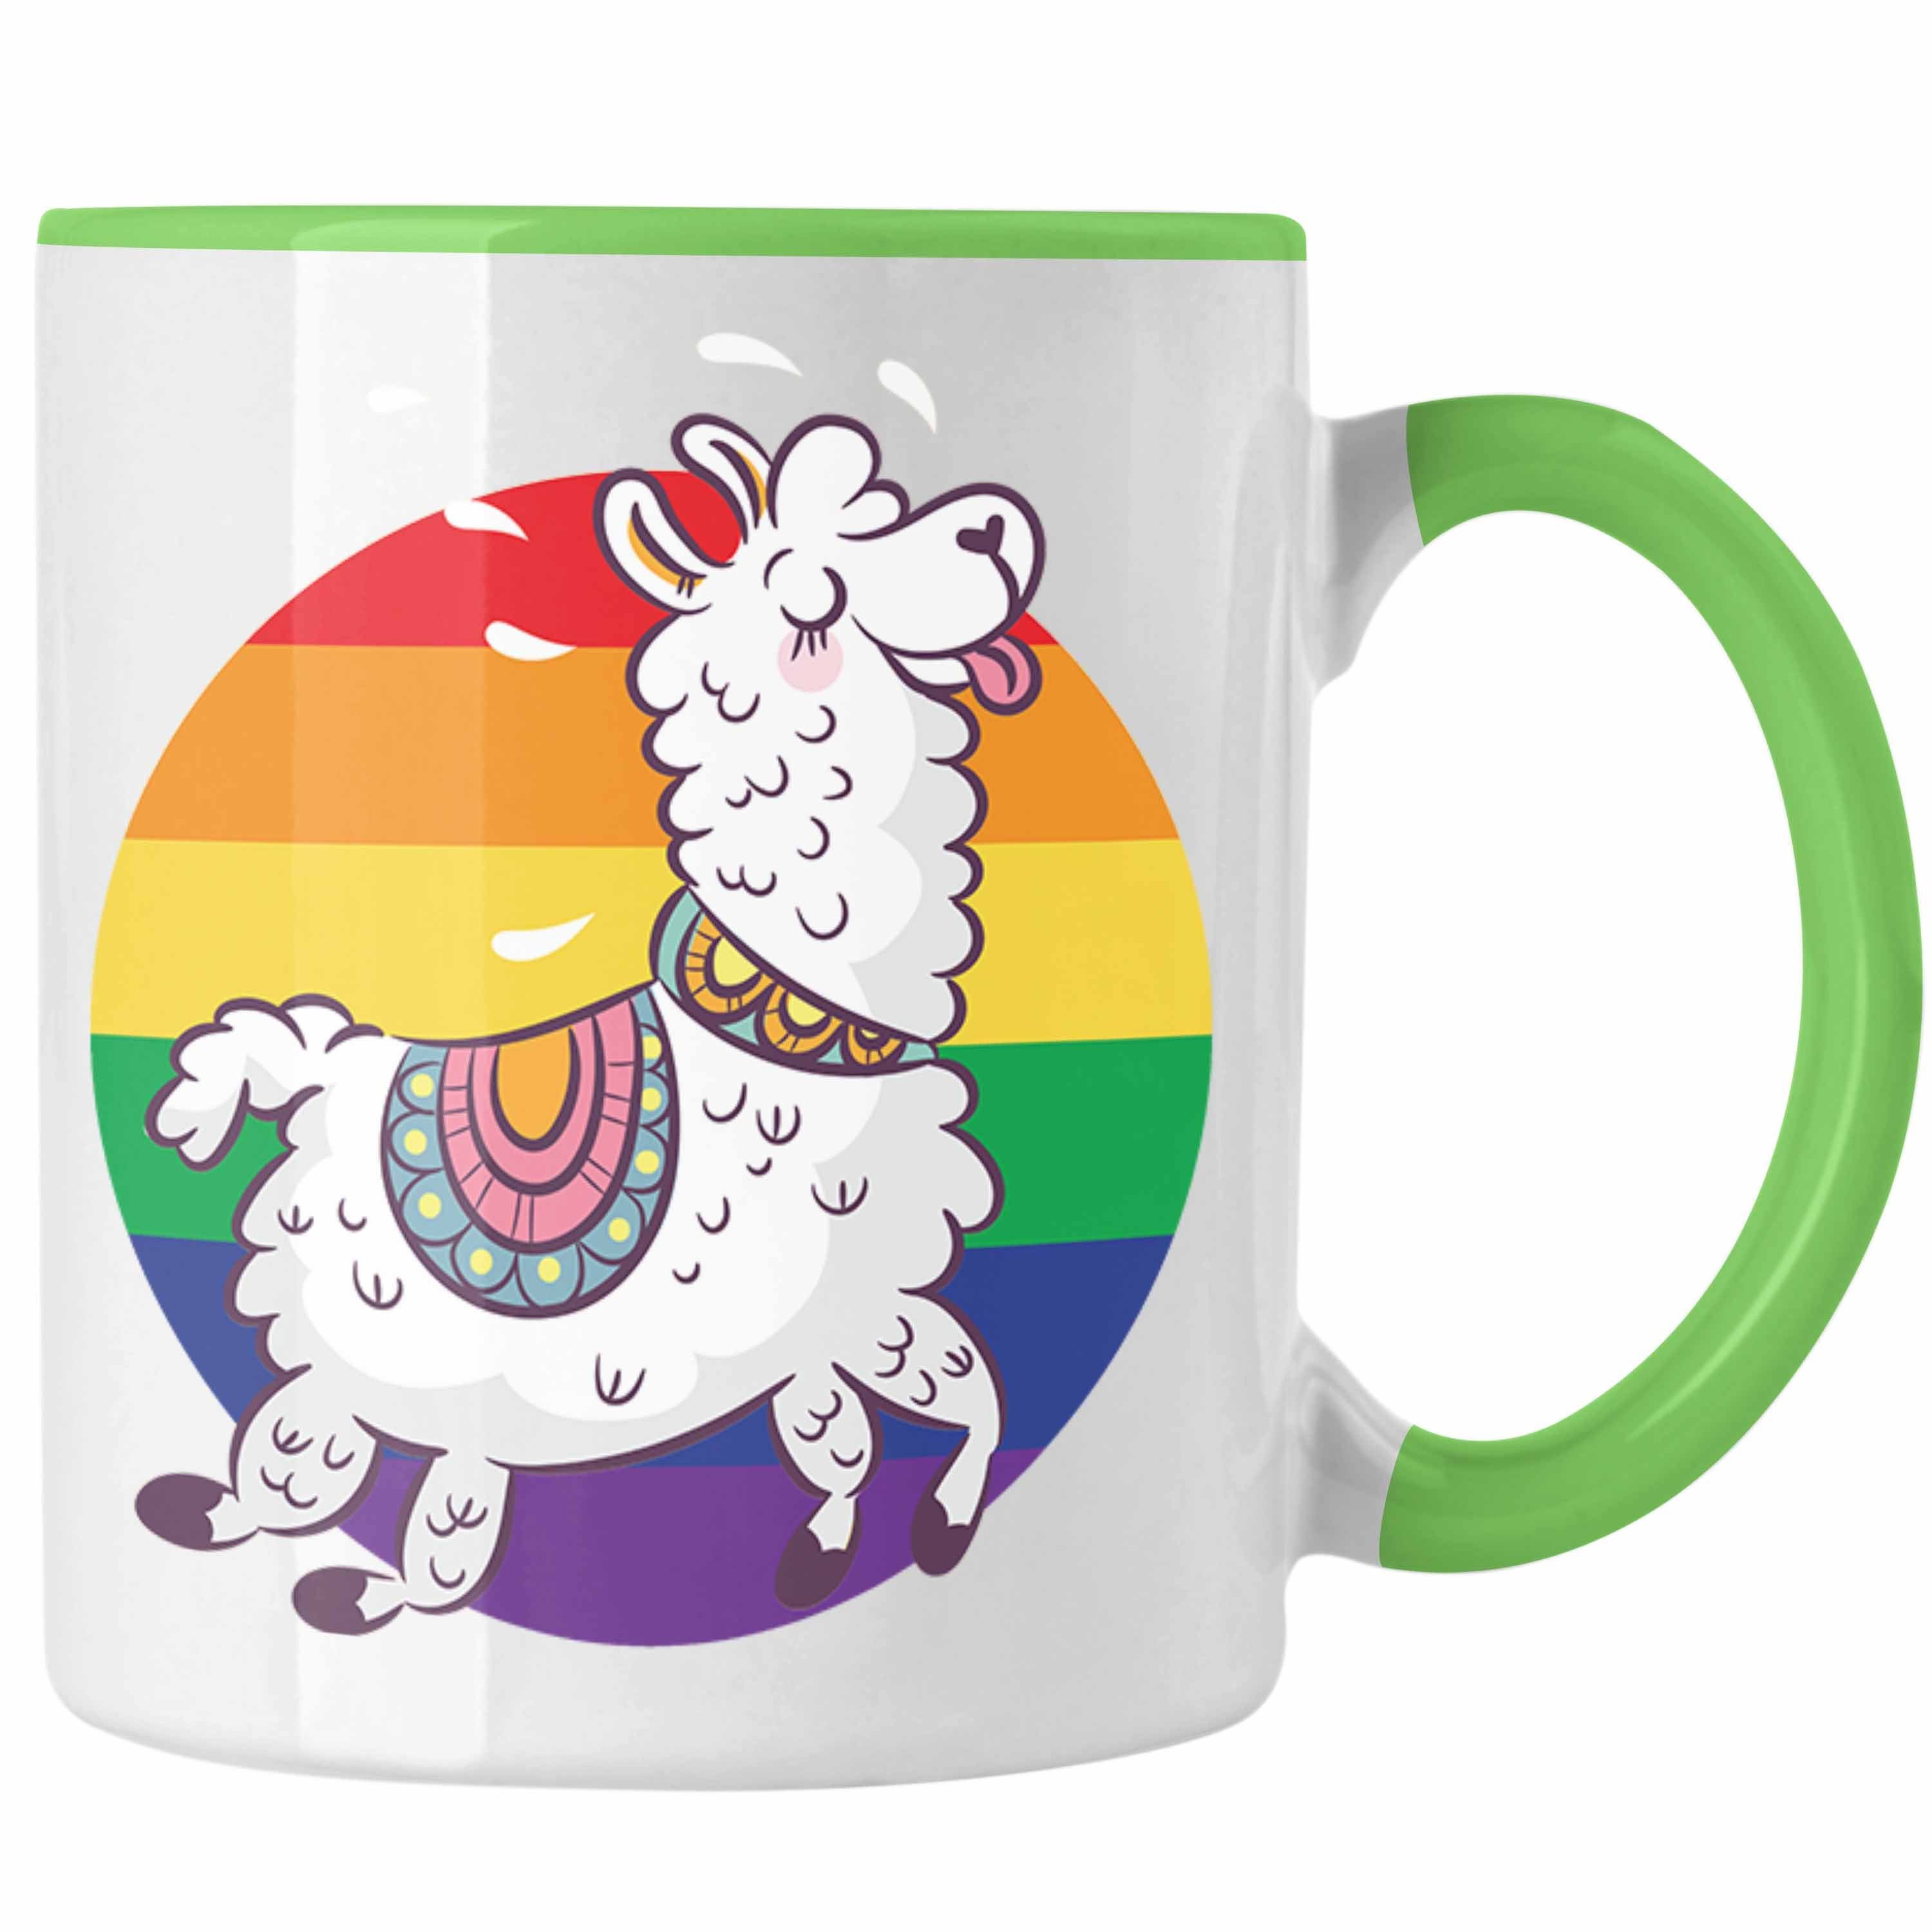 Trendation Tasse Trendation - Regenbogen Tasse Geschenk LGBT Schwule Lesben Transgender Grafik Pride Tolles Llama Grün